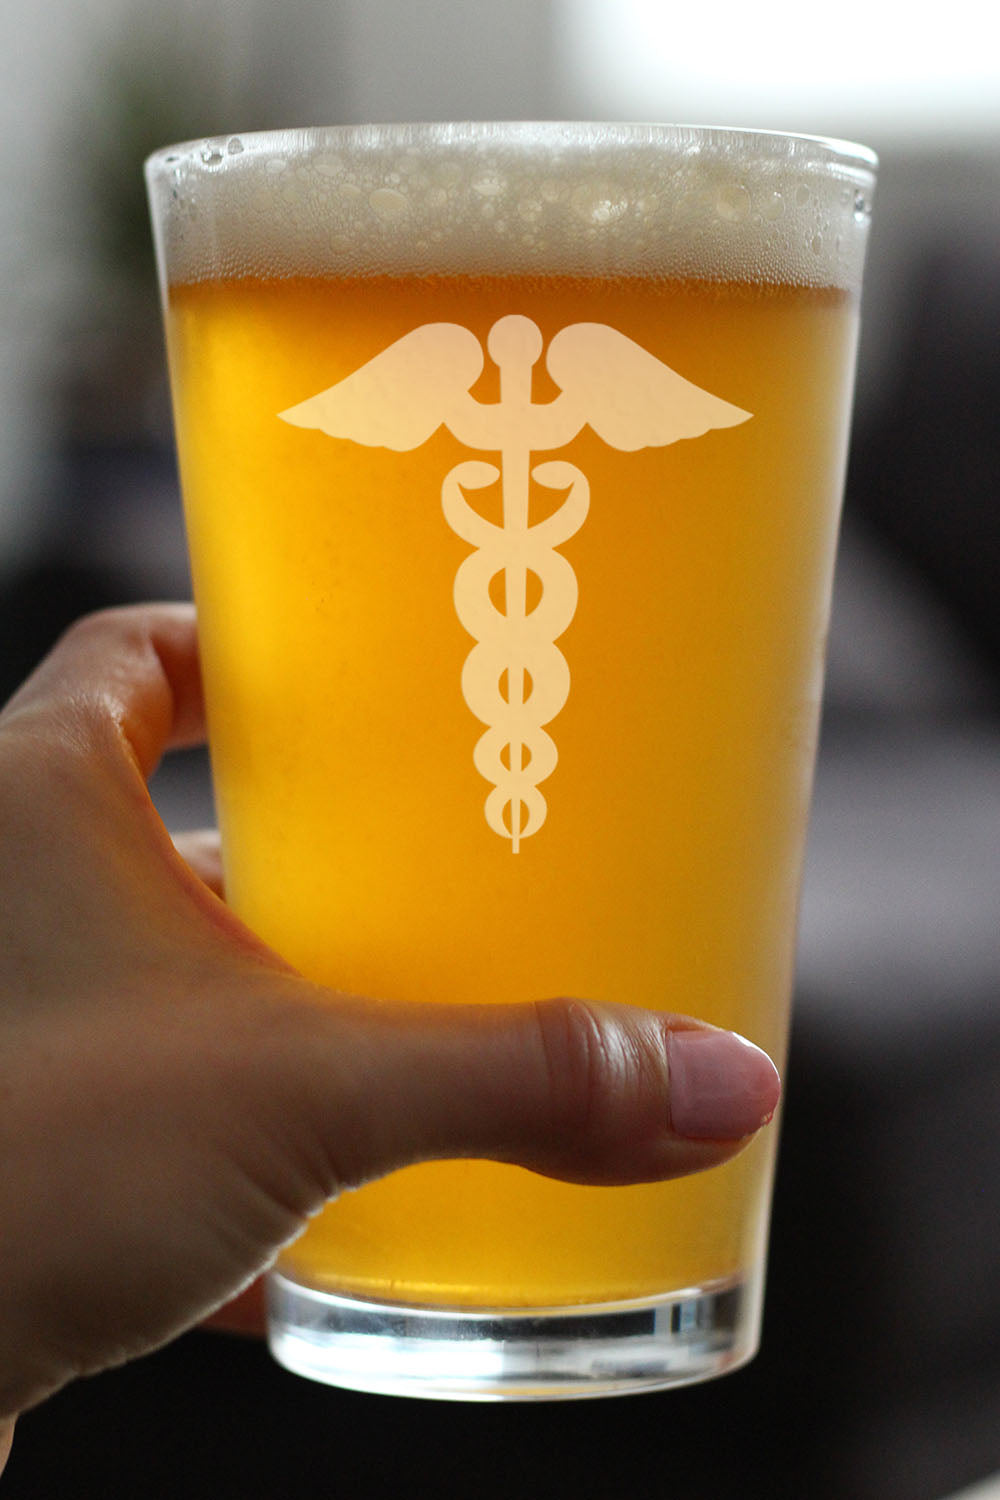 Caduceus Medical Symbol - Pint Glass for BeerEssential Healthcare Workers, Doctors, Nurses, Medical Staff - 16 oz Glasses